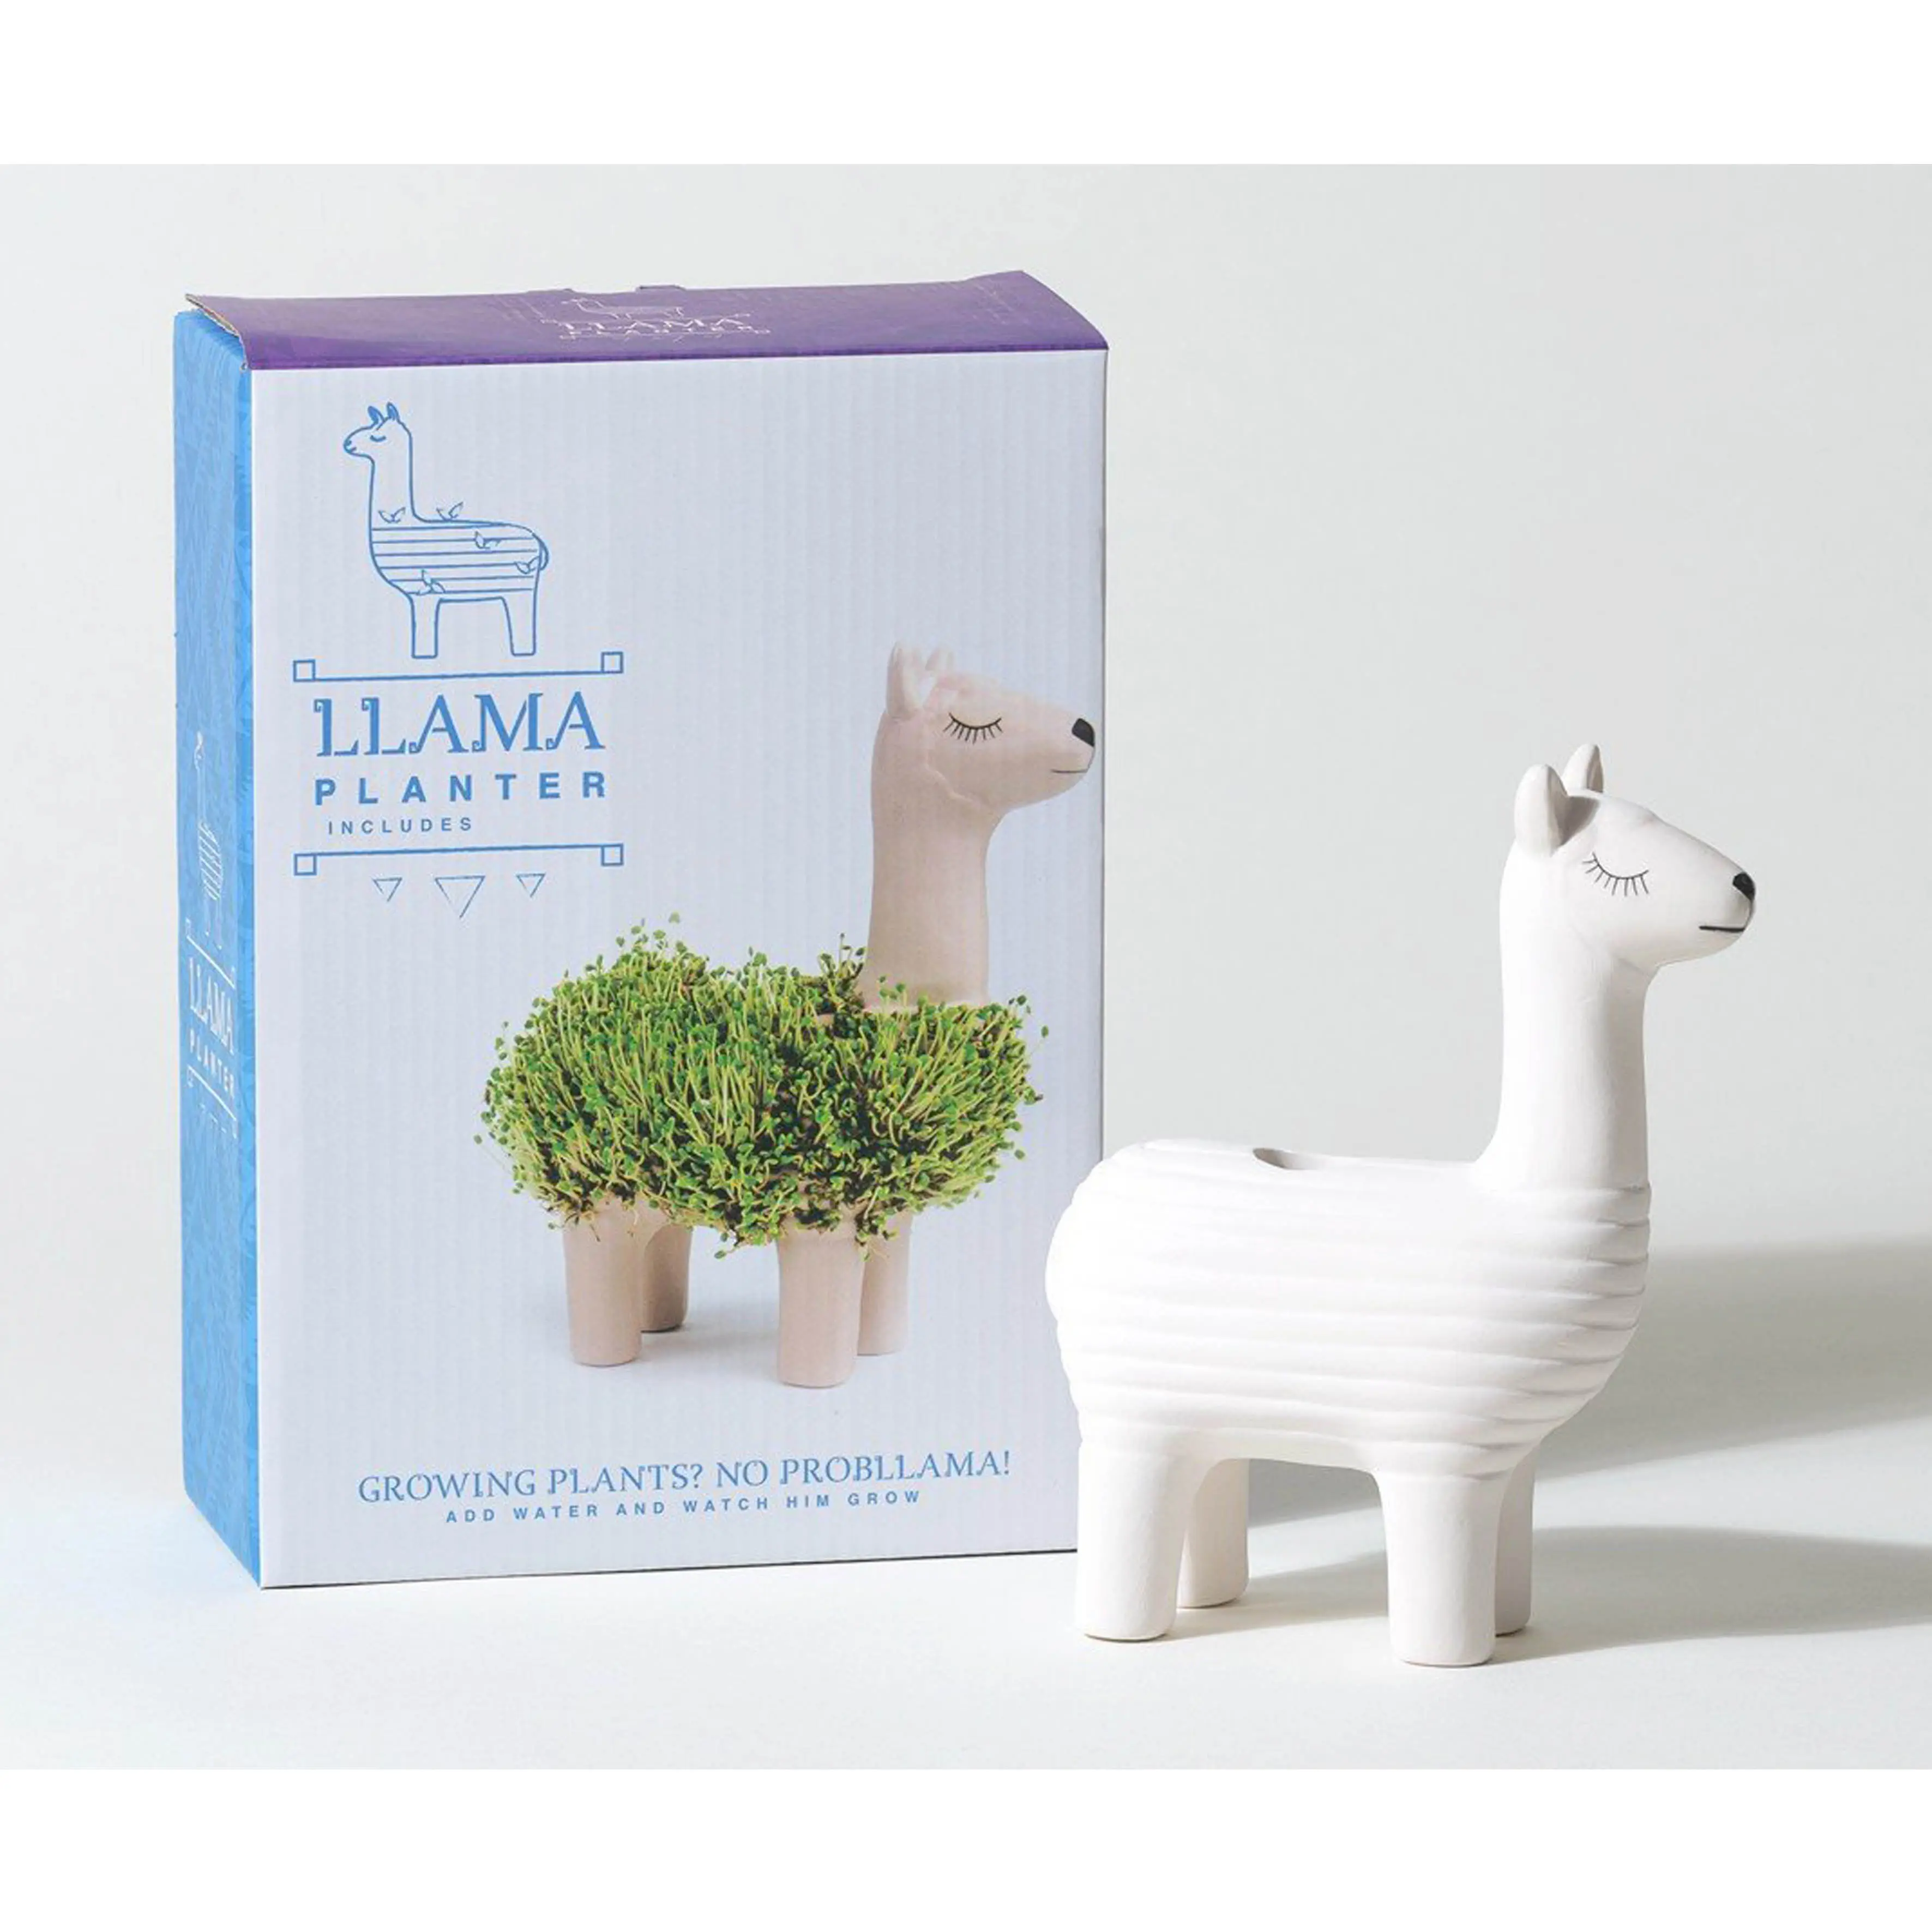 souvenirs gift Llama custom chia pet Planter Chia Plantables indoor plant grow kit high quality